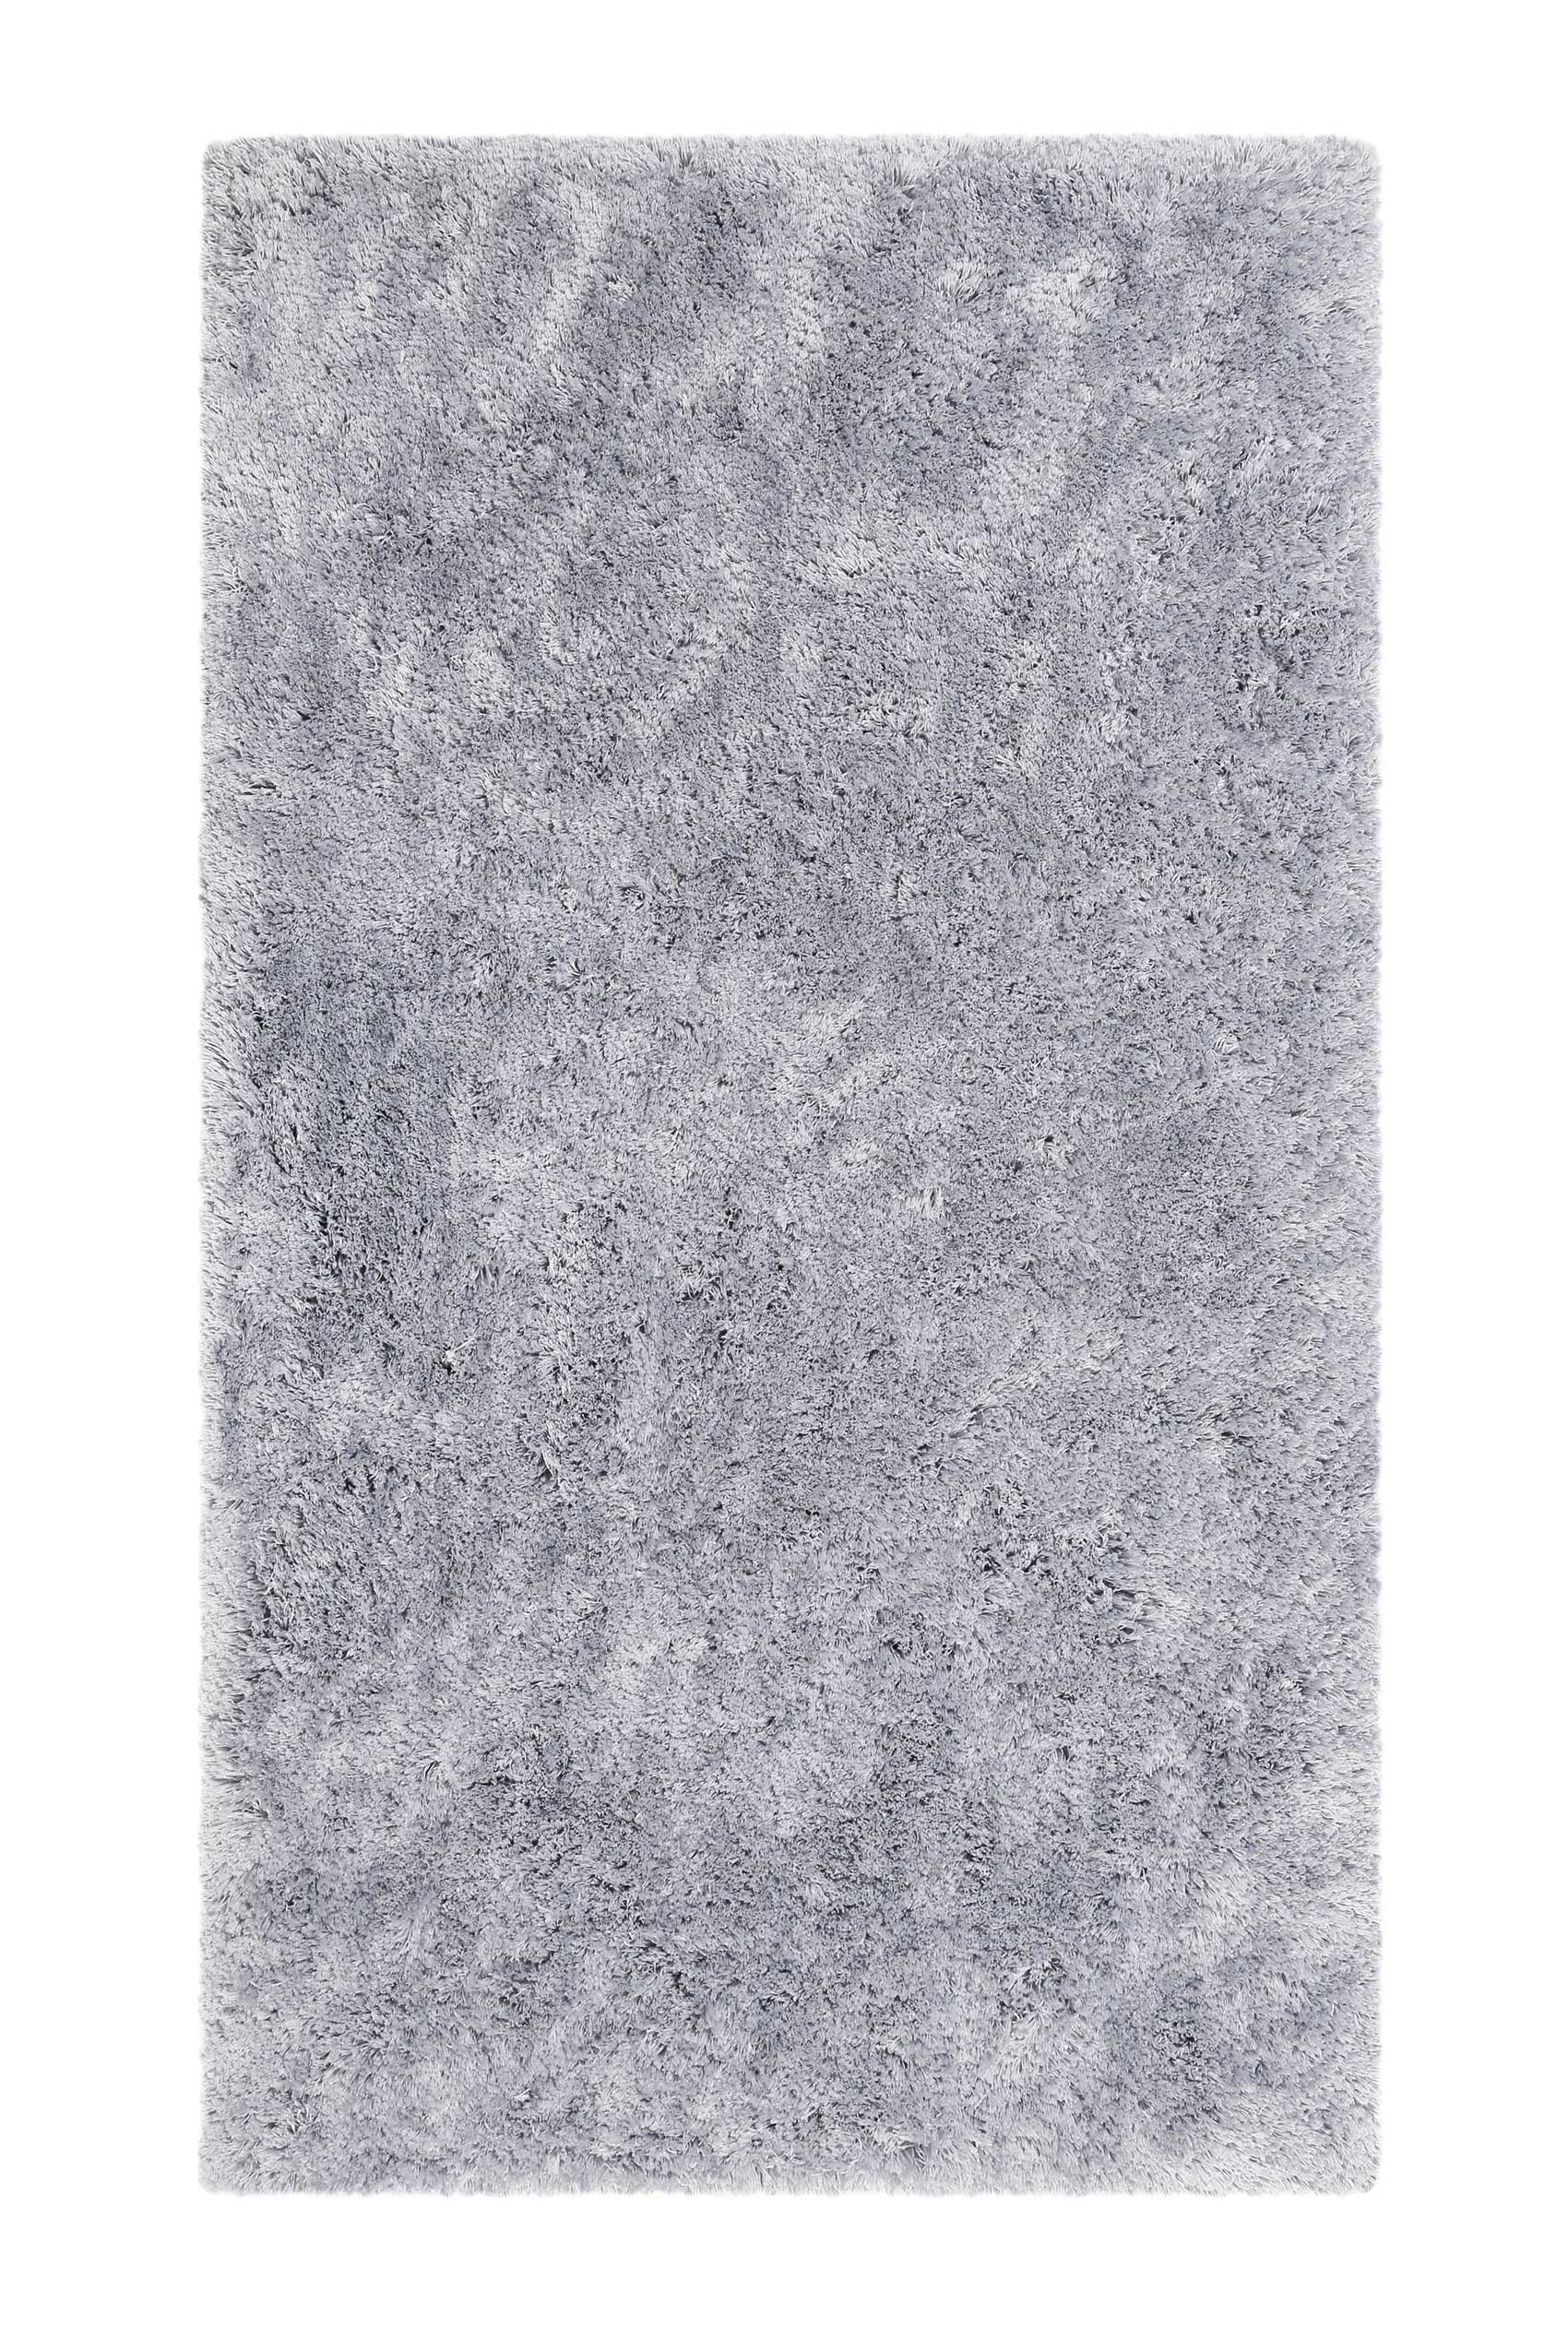 Tapis de bain microfibre antidérapant gris 80x150